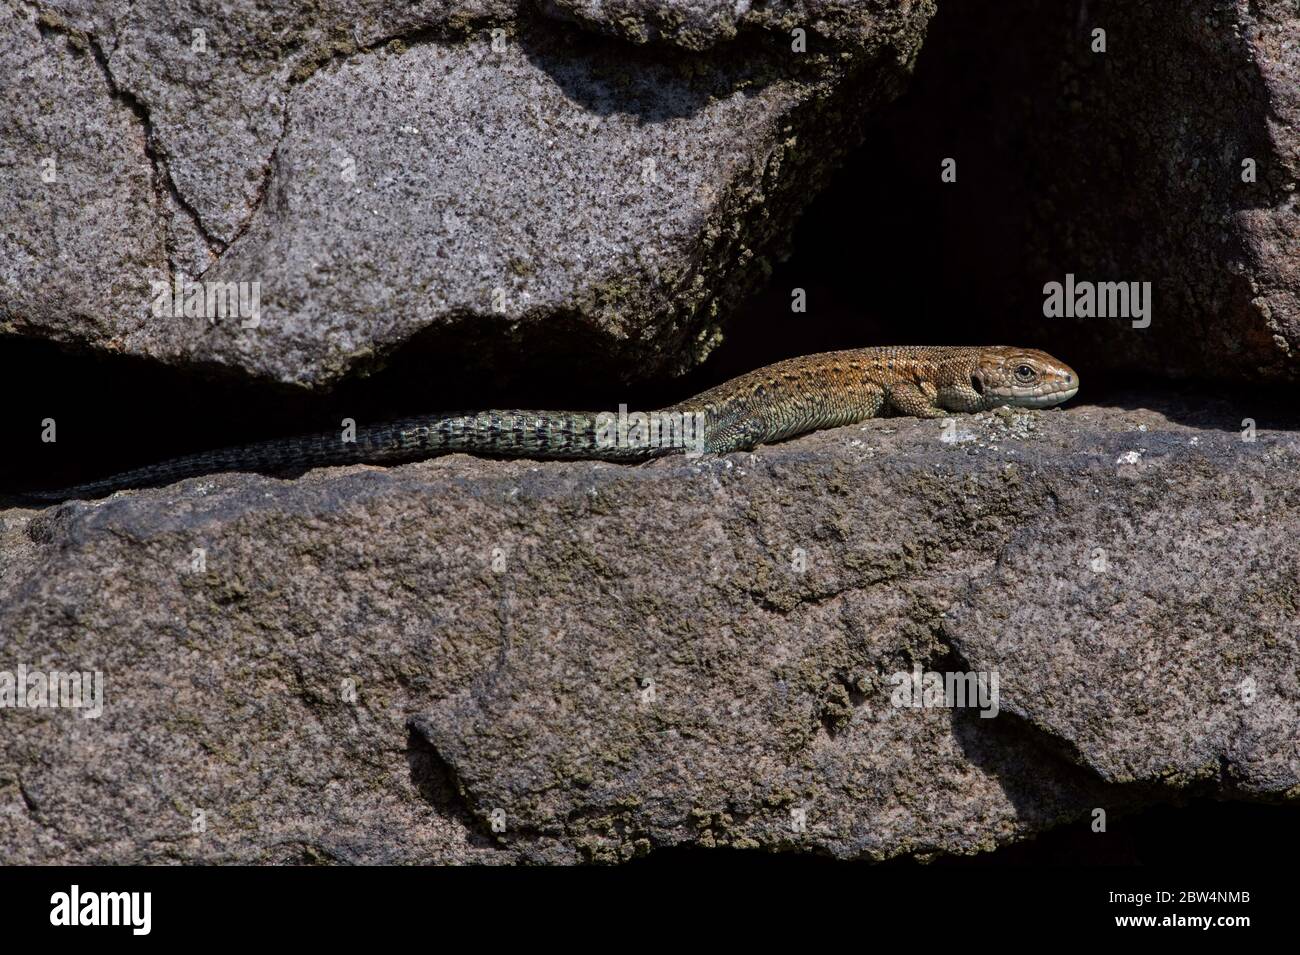 Juvenile Viviparous lizard (Zootoca vivipara) basking on a dry stone wall Stock Photo